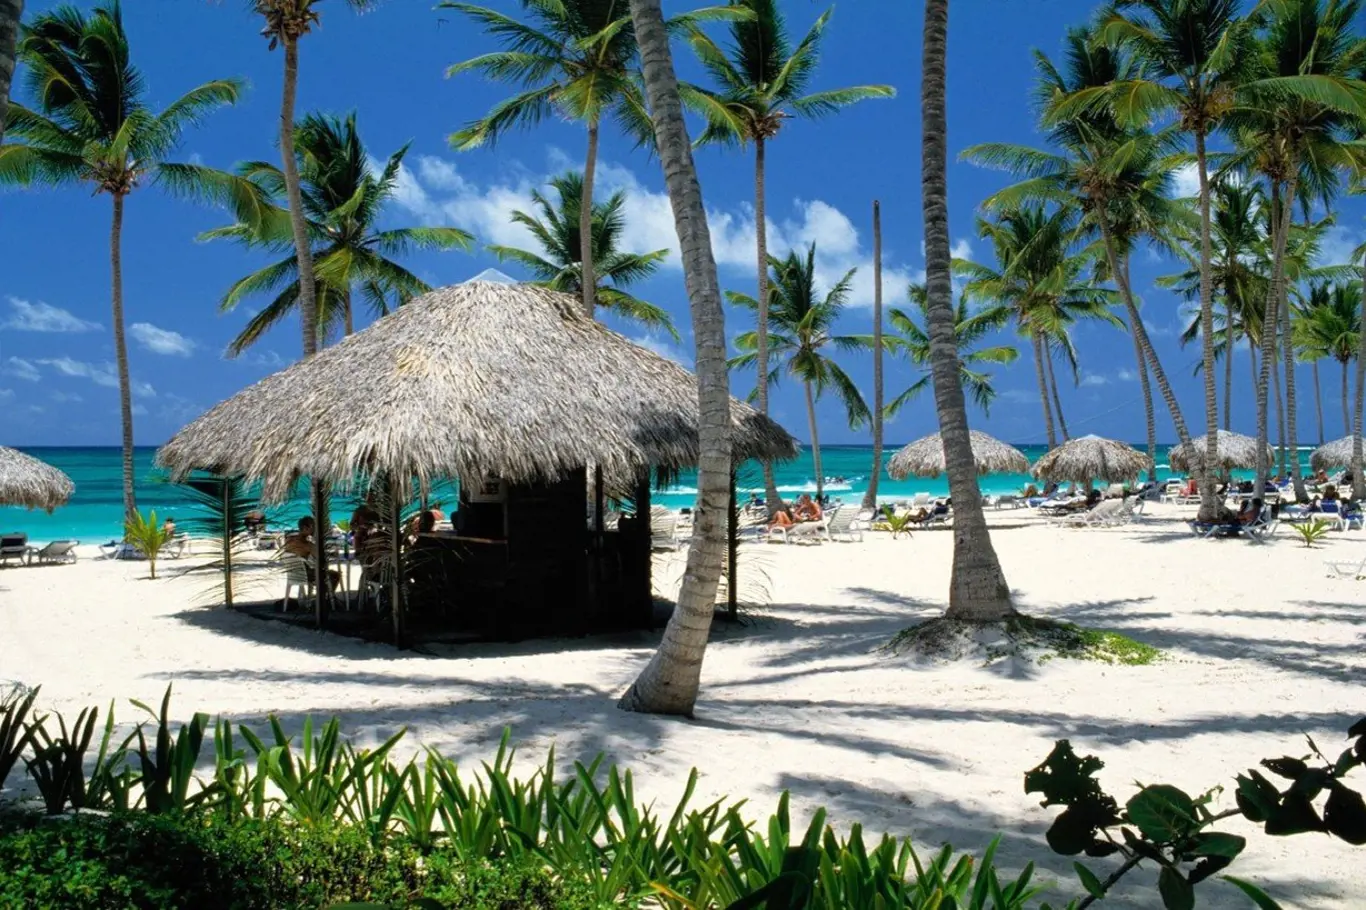 Nádherná pláž Puerto plata v Dominikánské republice. Tam bude radost dovolenkovat